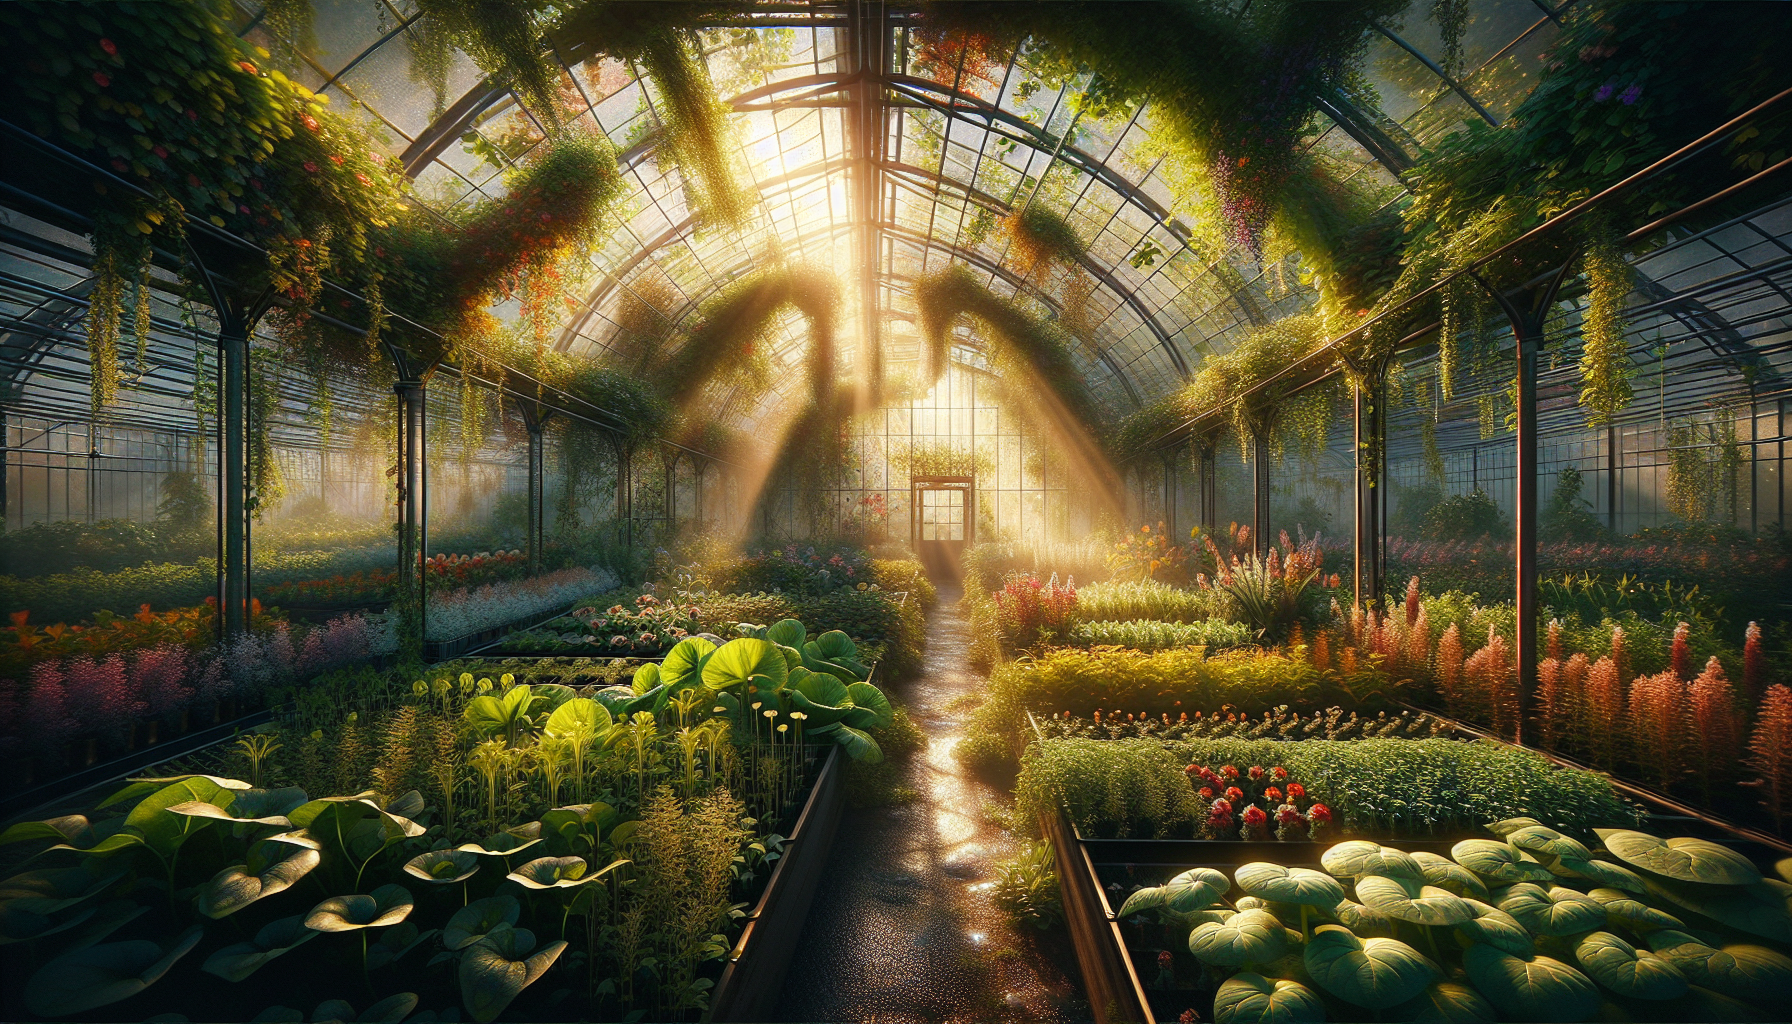 The Greenhouse Gardening Advantage